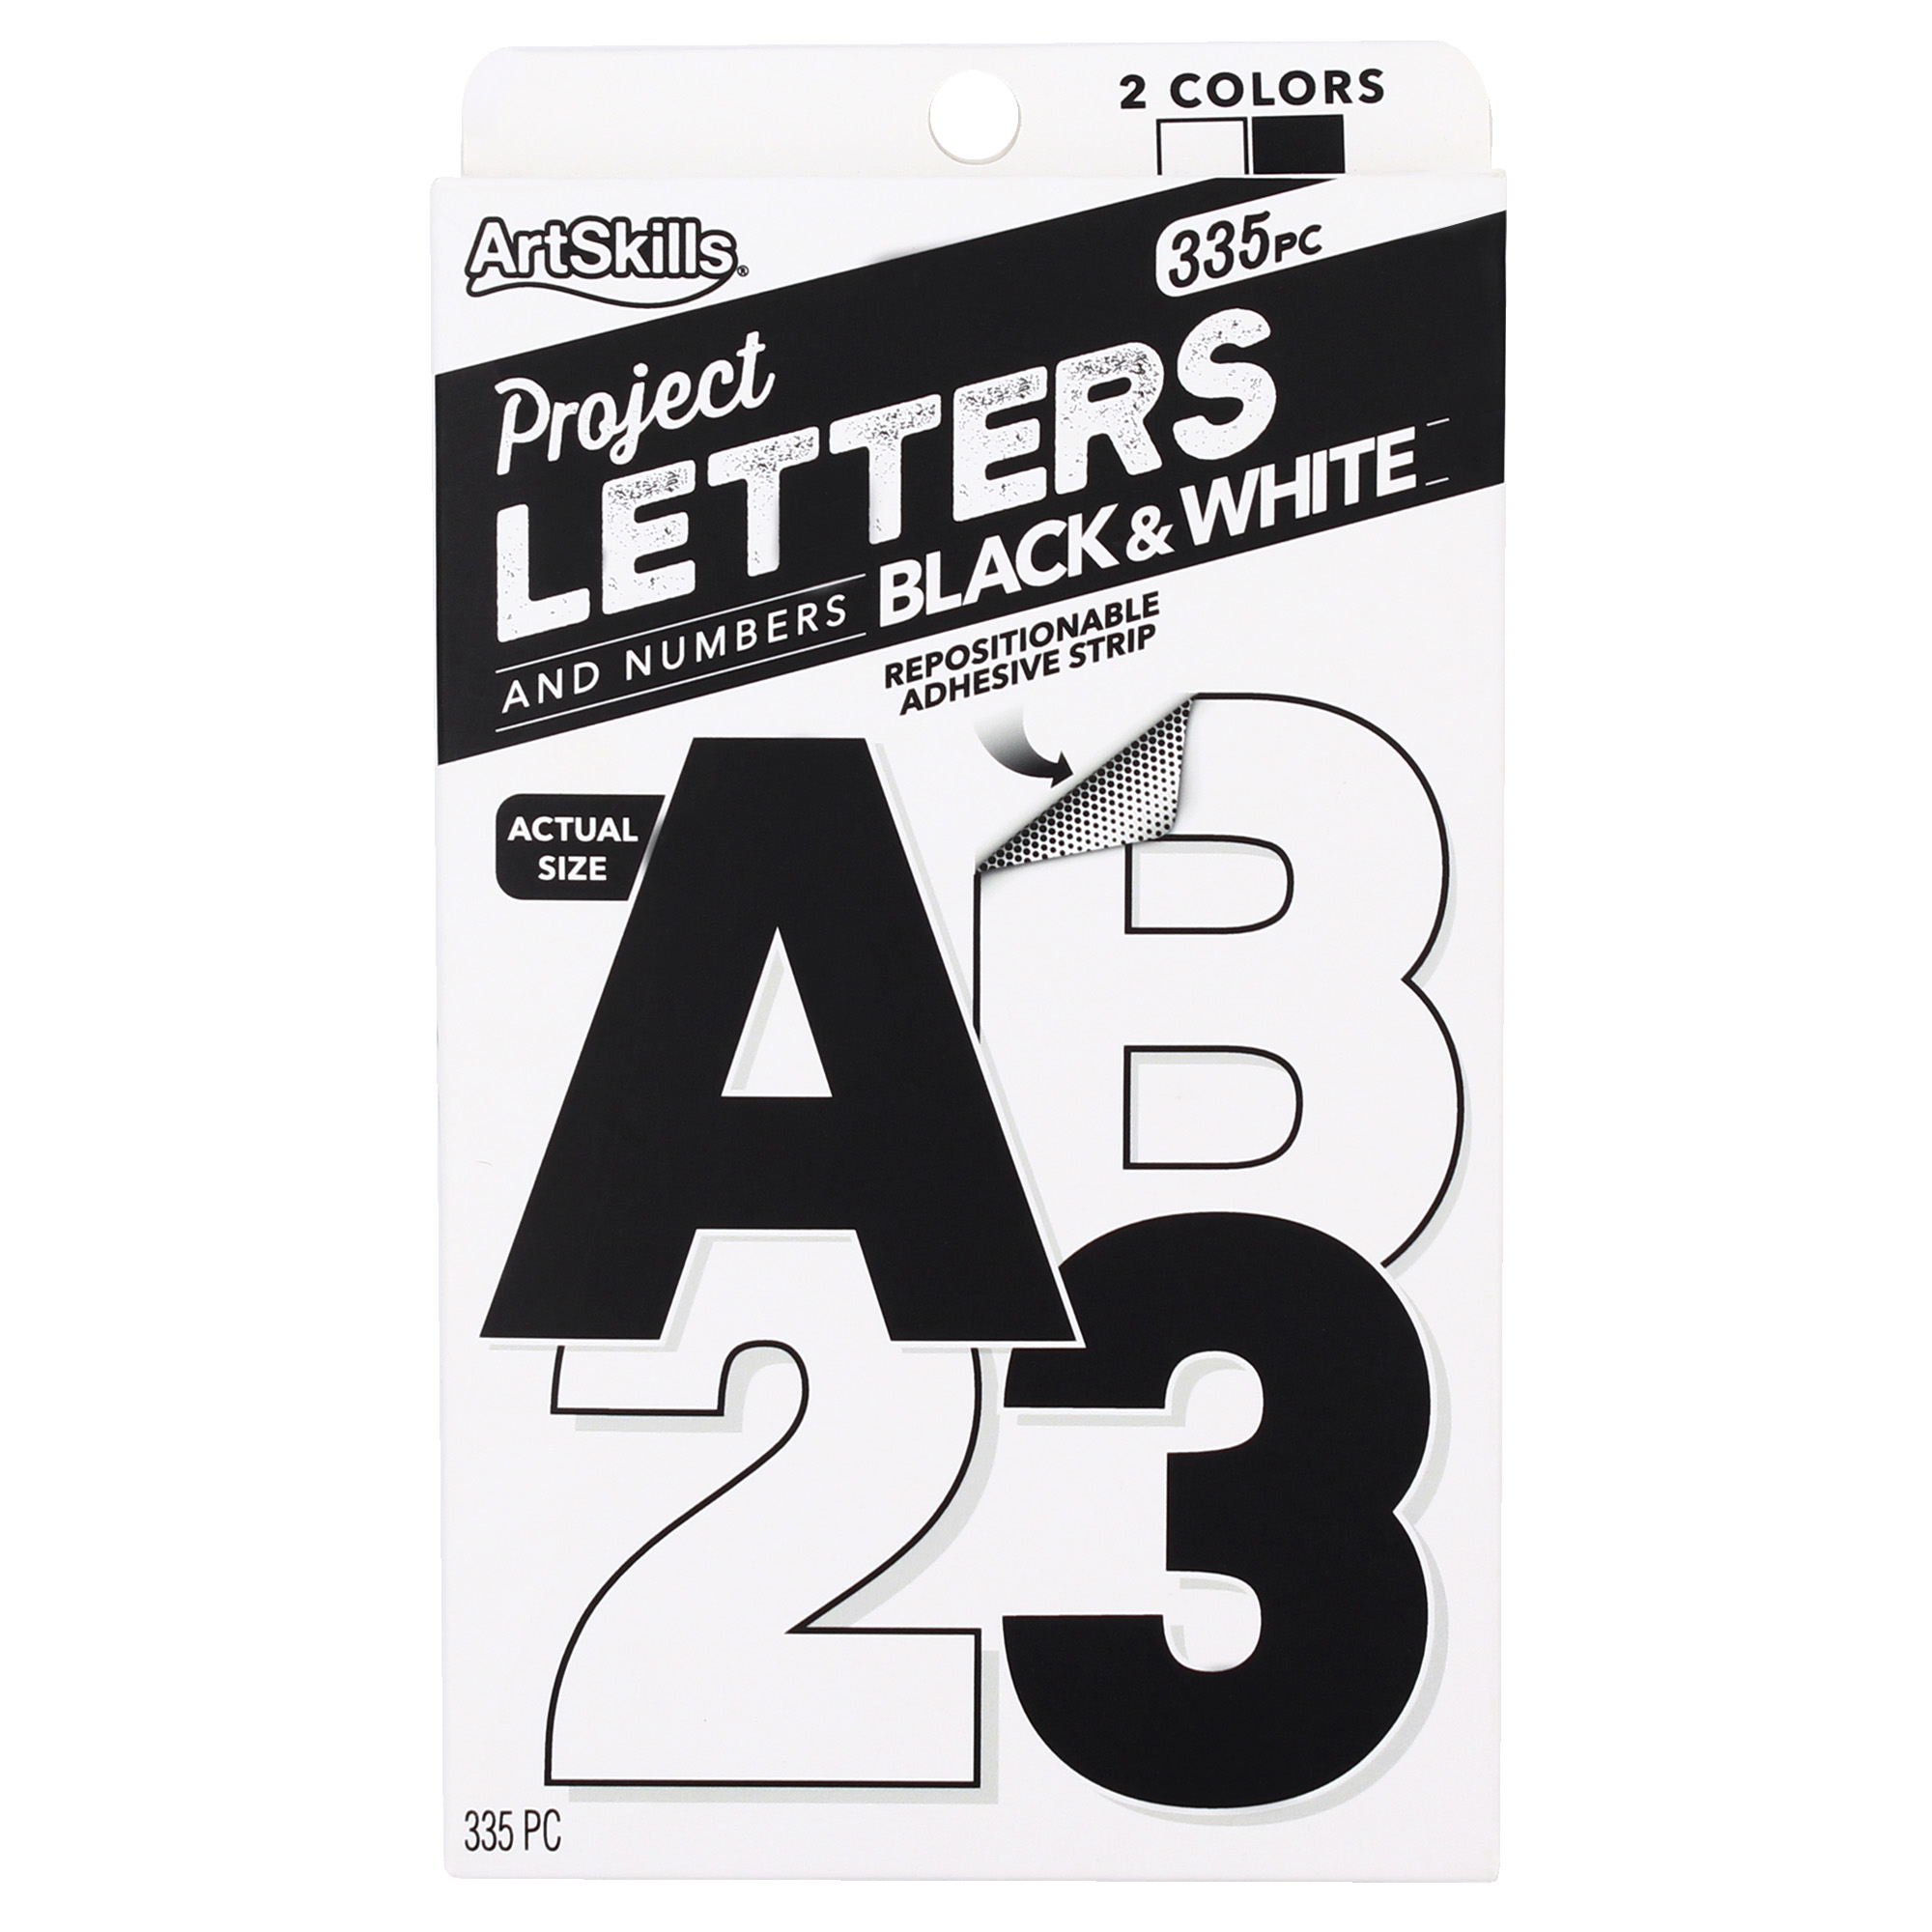 2 Pack Artskills quick letter pads, black, 2, 310pc 